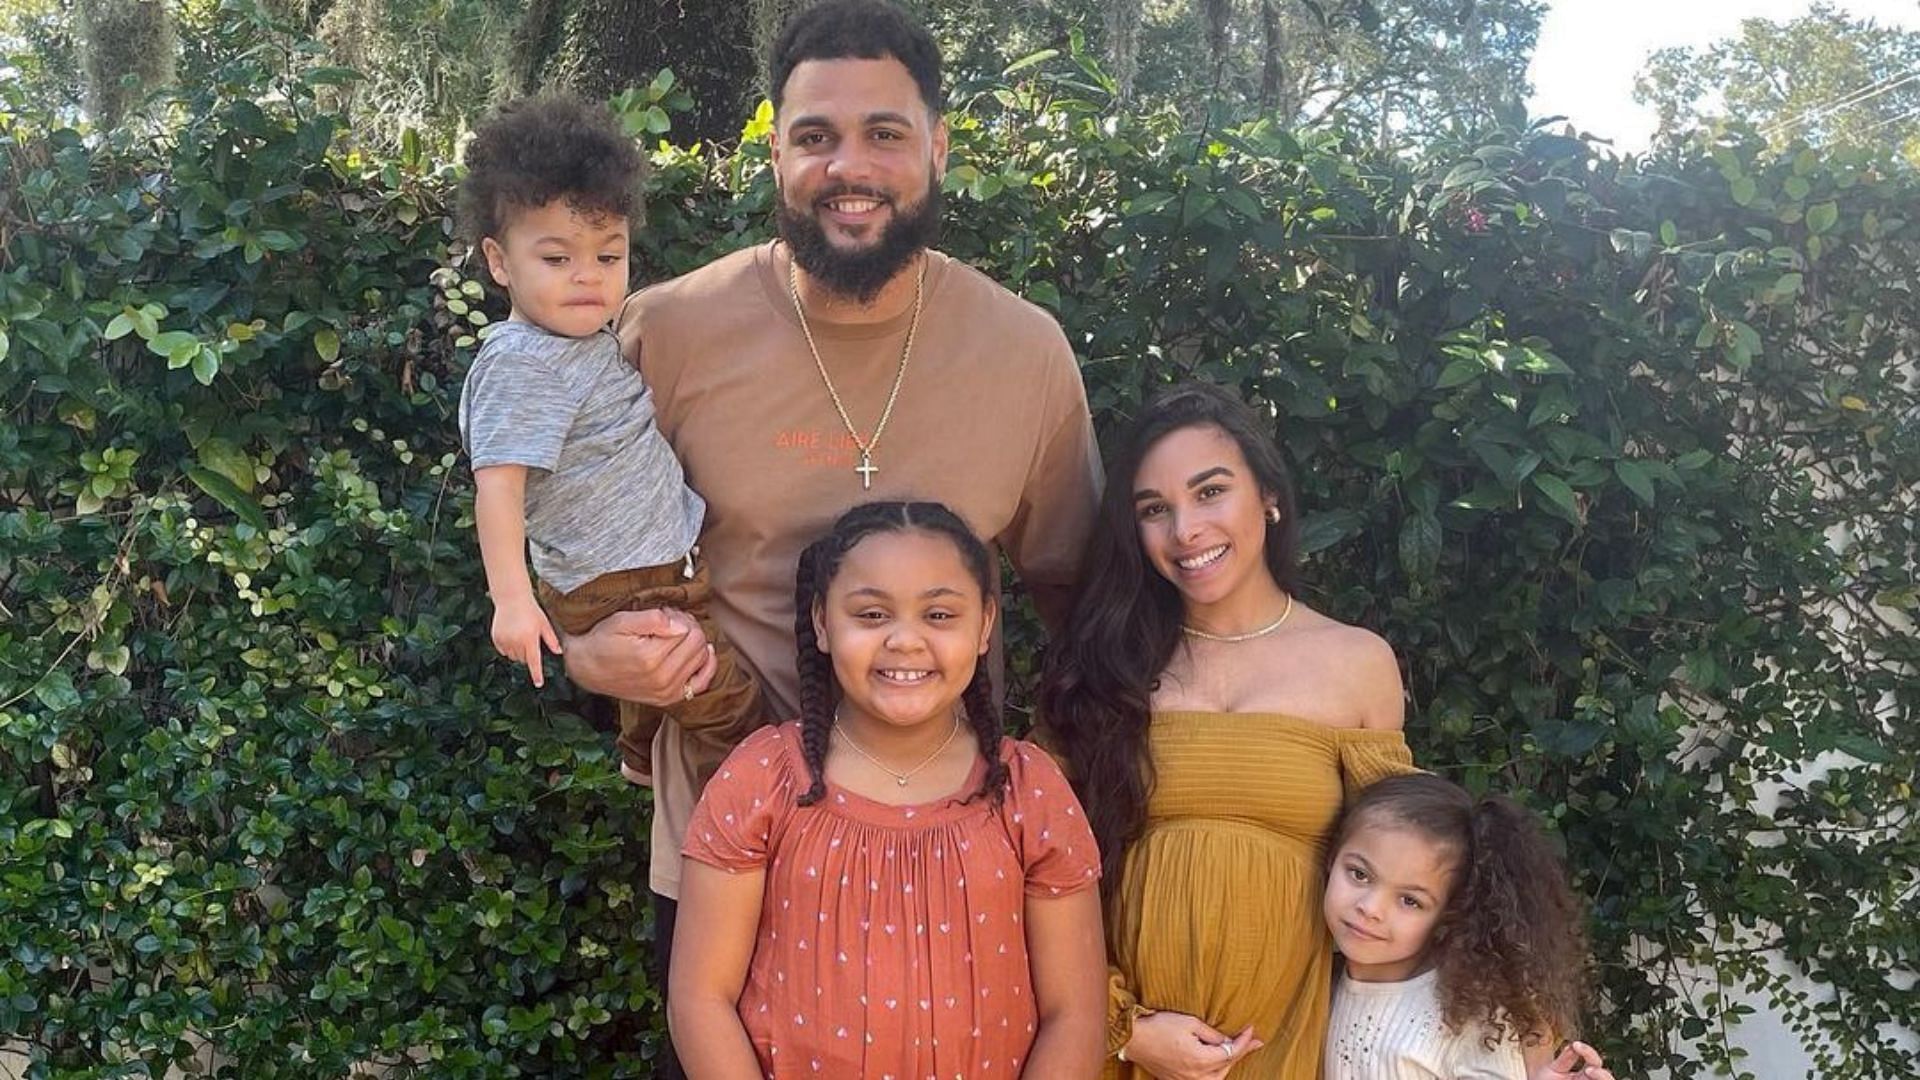 Tampa Bay Buccaneers wide receiver Mike Evans with his wife, Ashli, and their three children: Ariah Lynn, Amari Thomas and Mackenzie. (Image credit: Ashli Evans on Instagram)